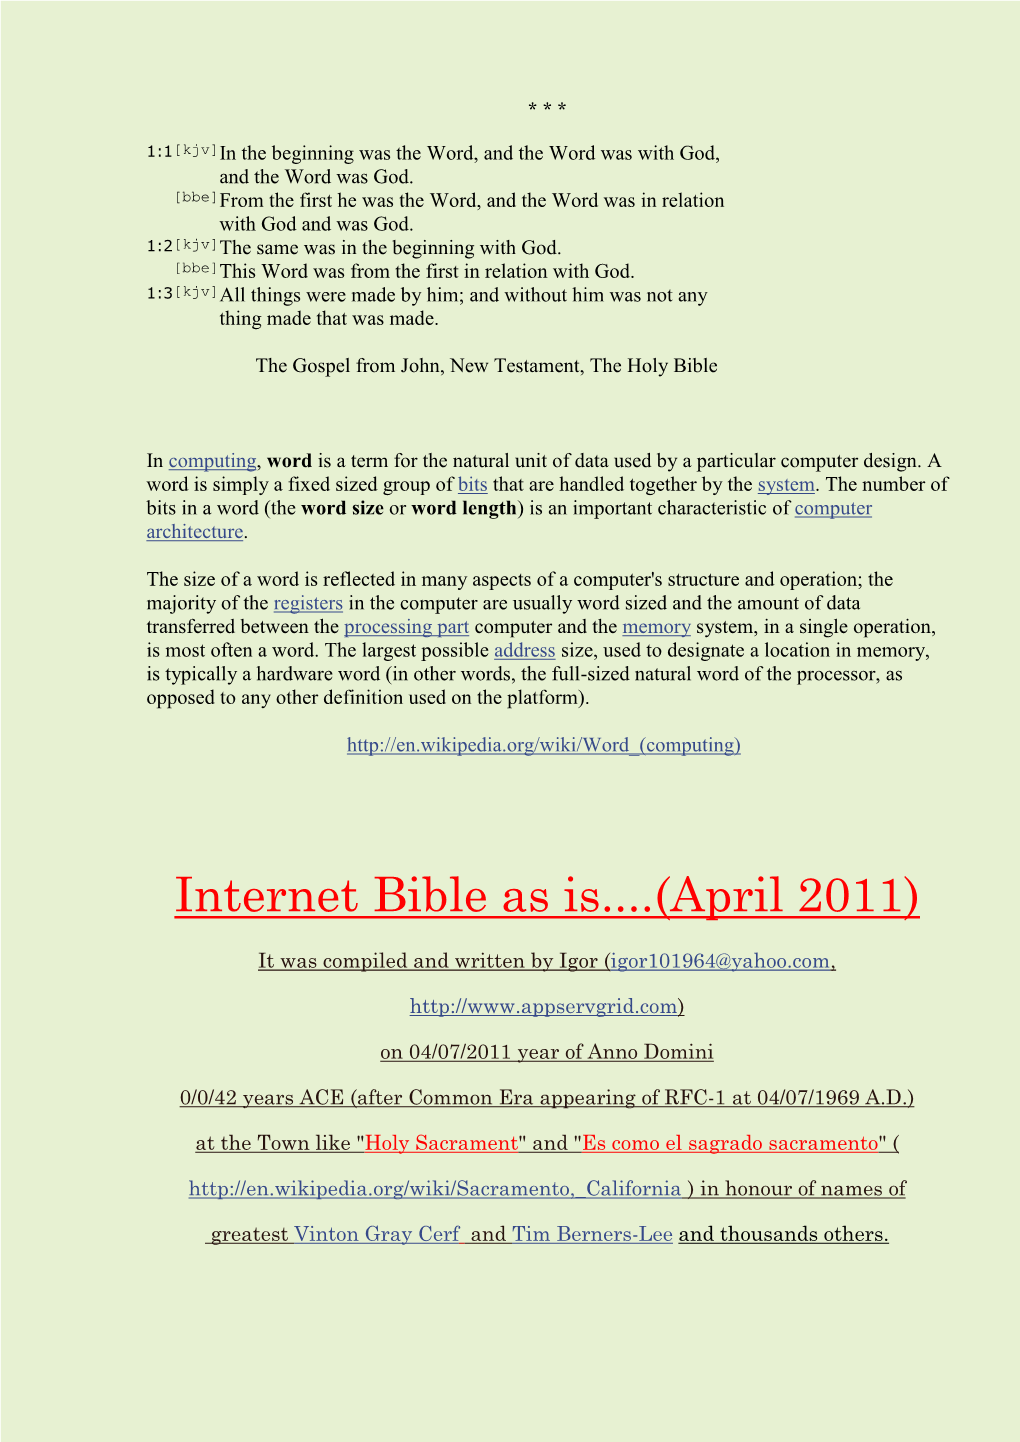 Internet Bible As Is...(April 2011)